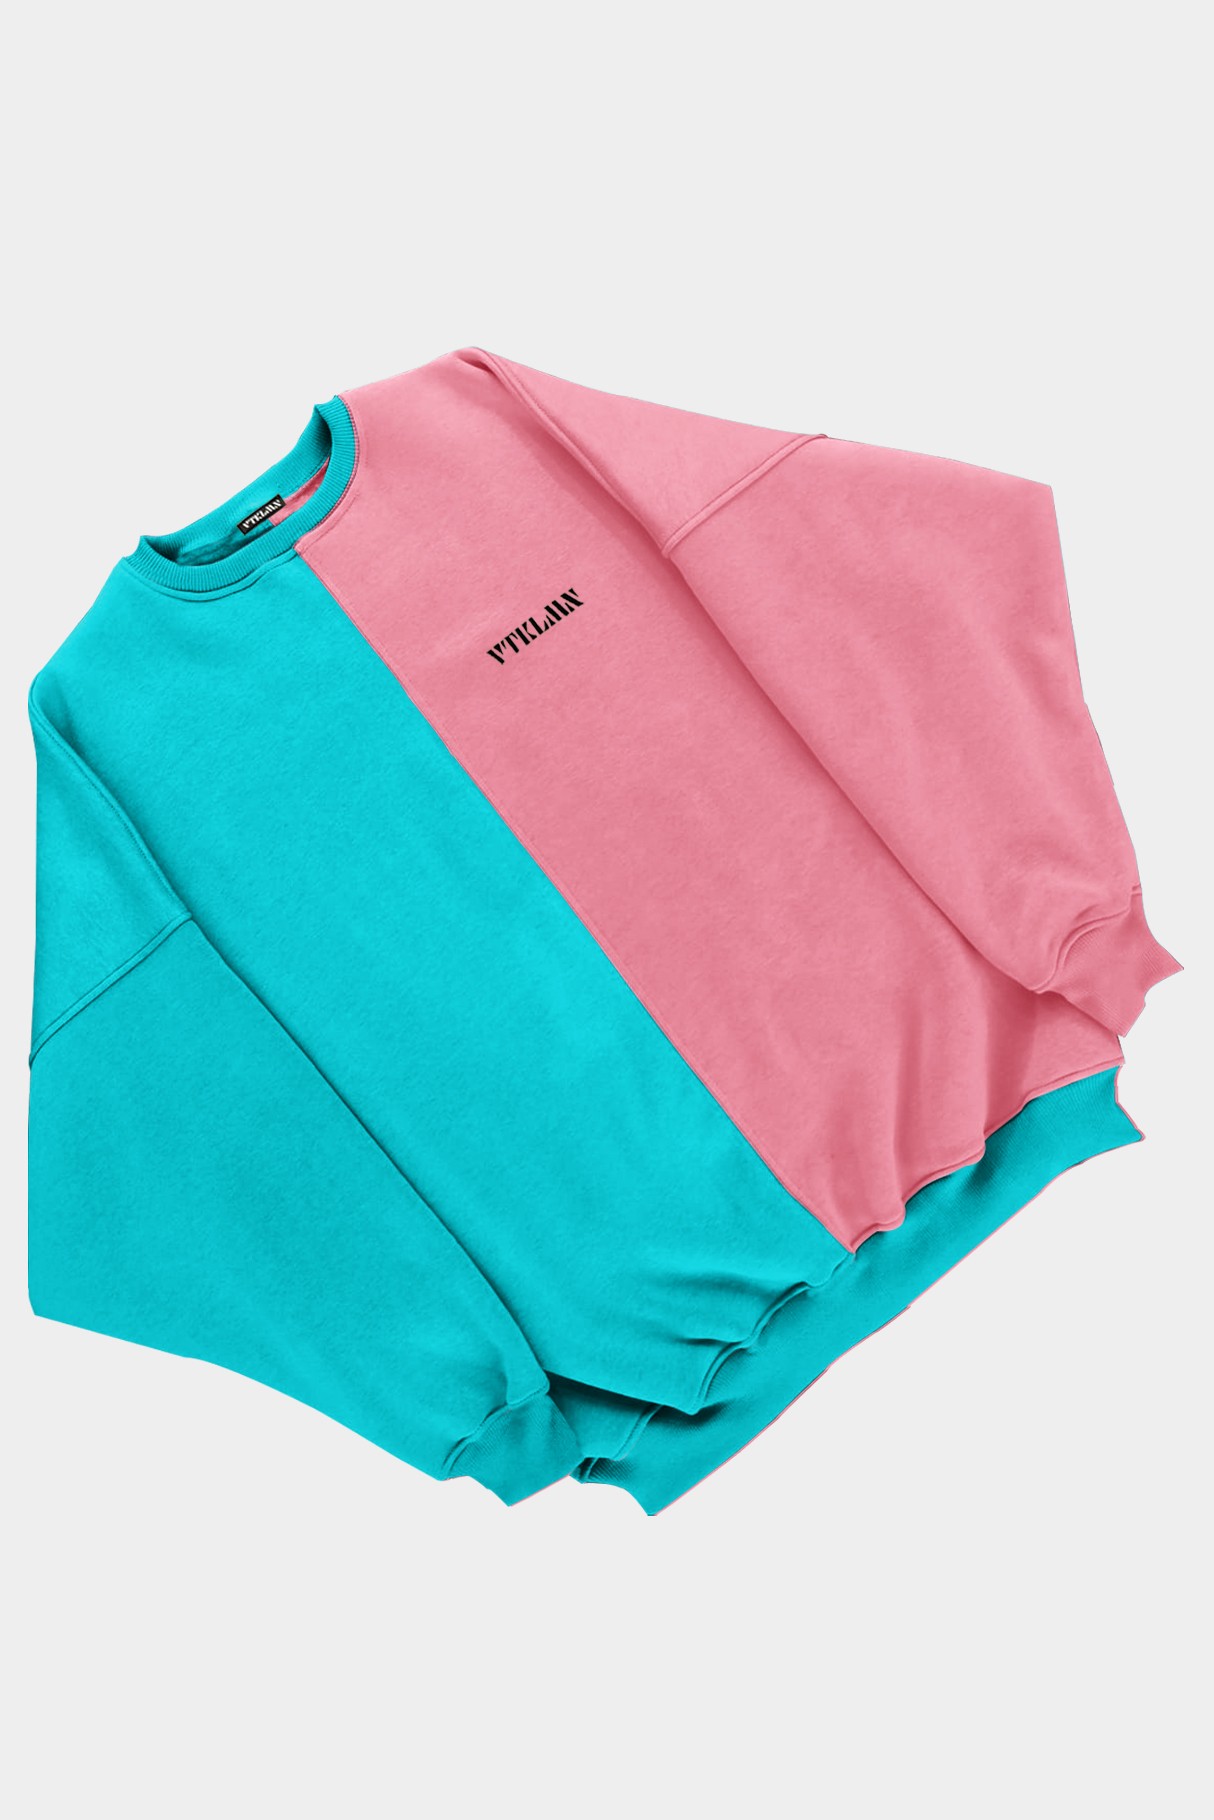  Kadın Erkek Renkli Sweatshirt - Turkuaz Pembe